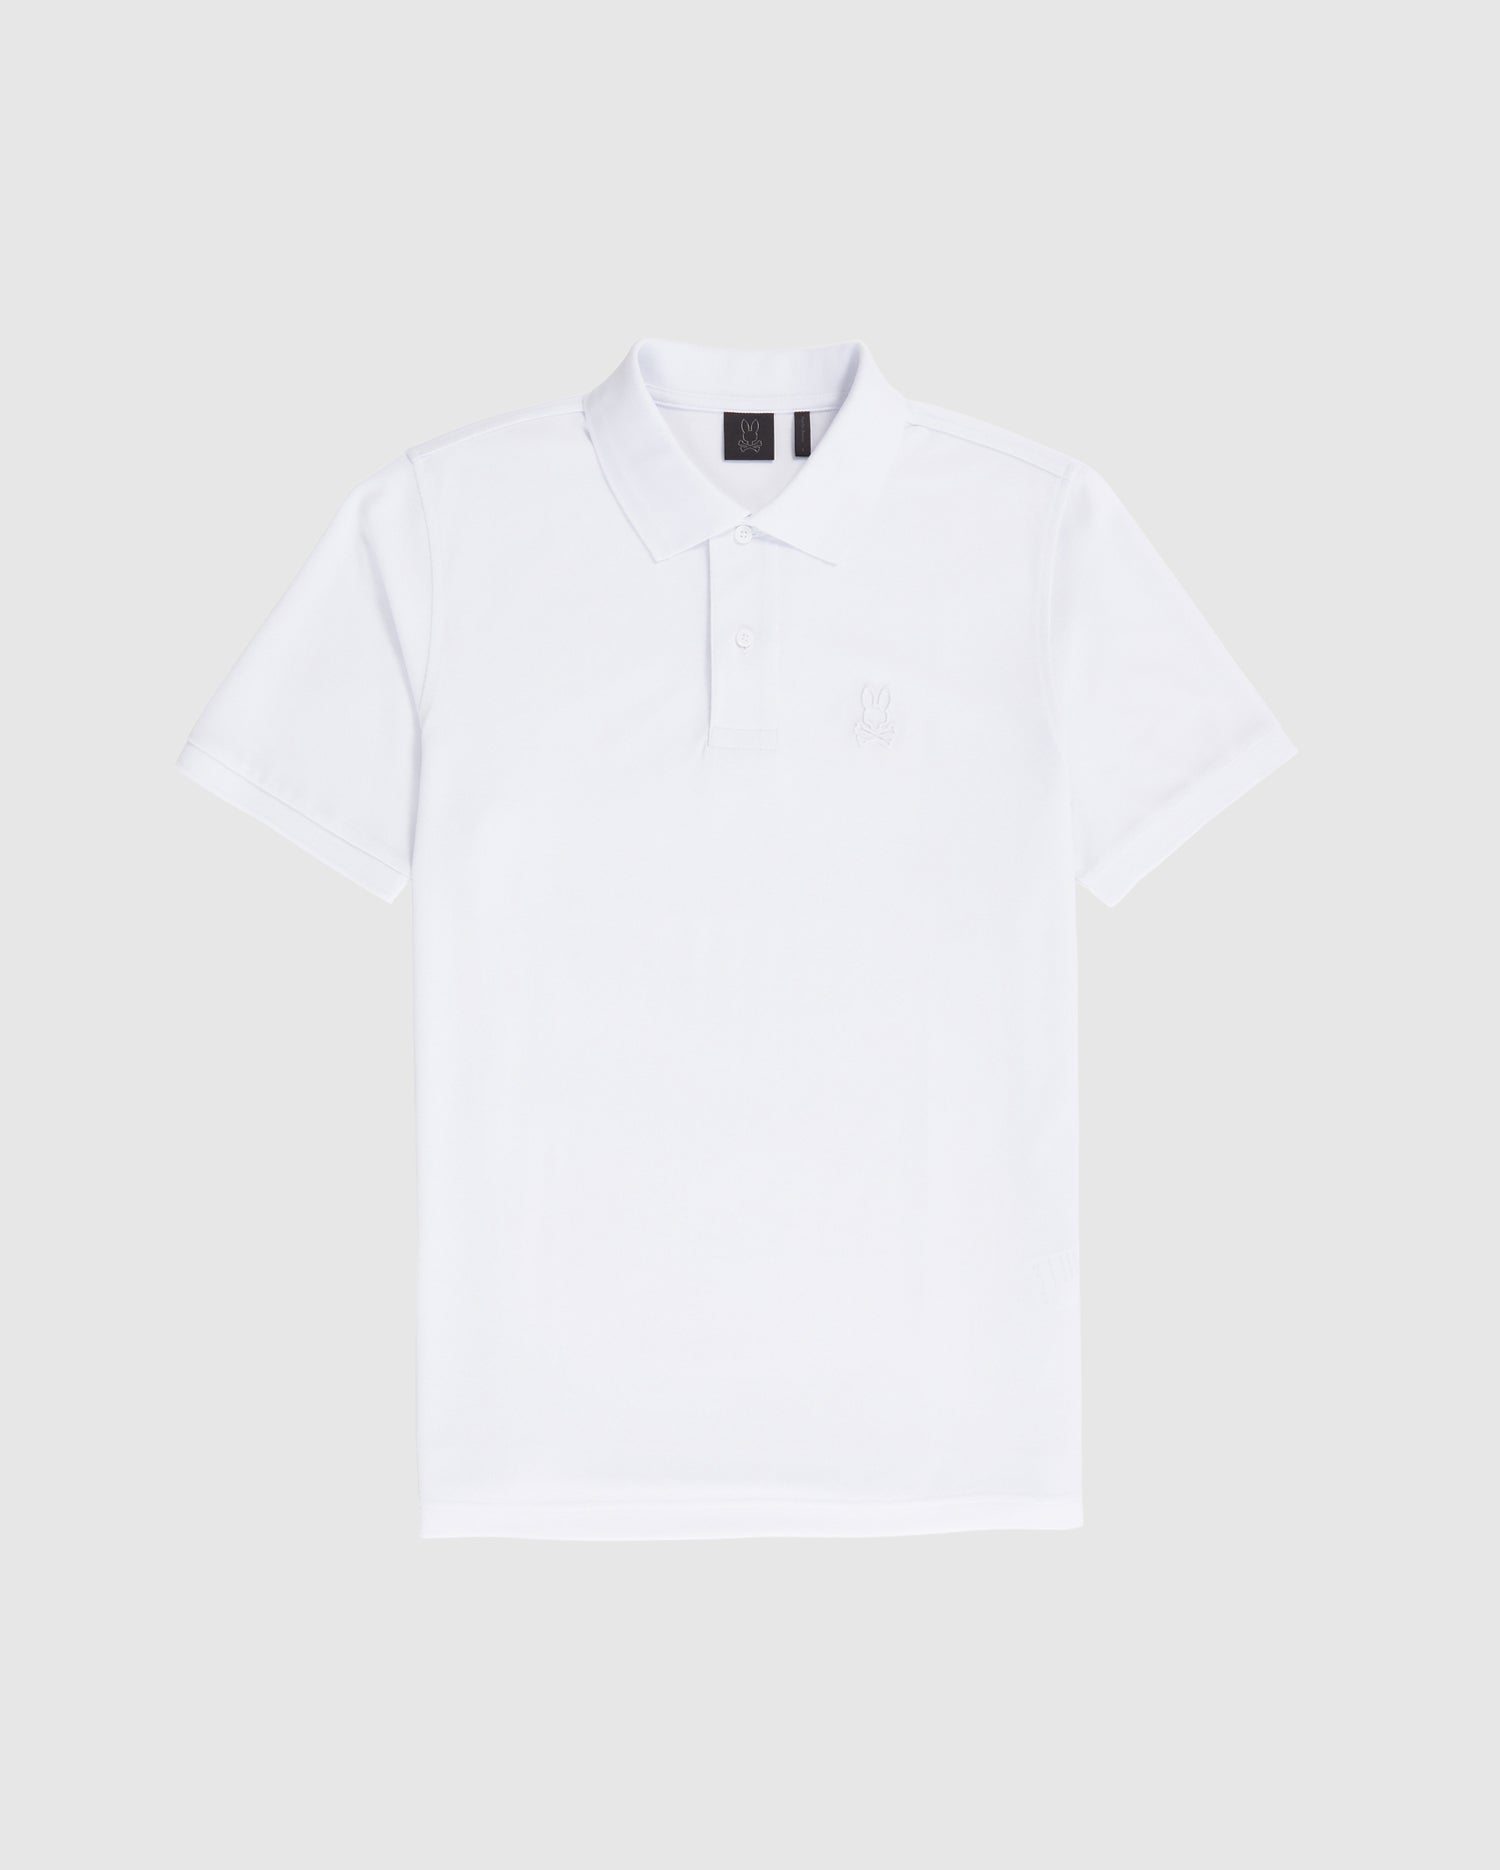 Shop Men's Outline Polo in White | Psycho Bunny